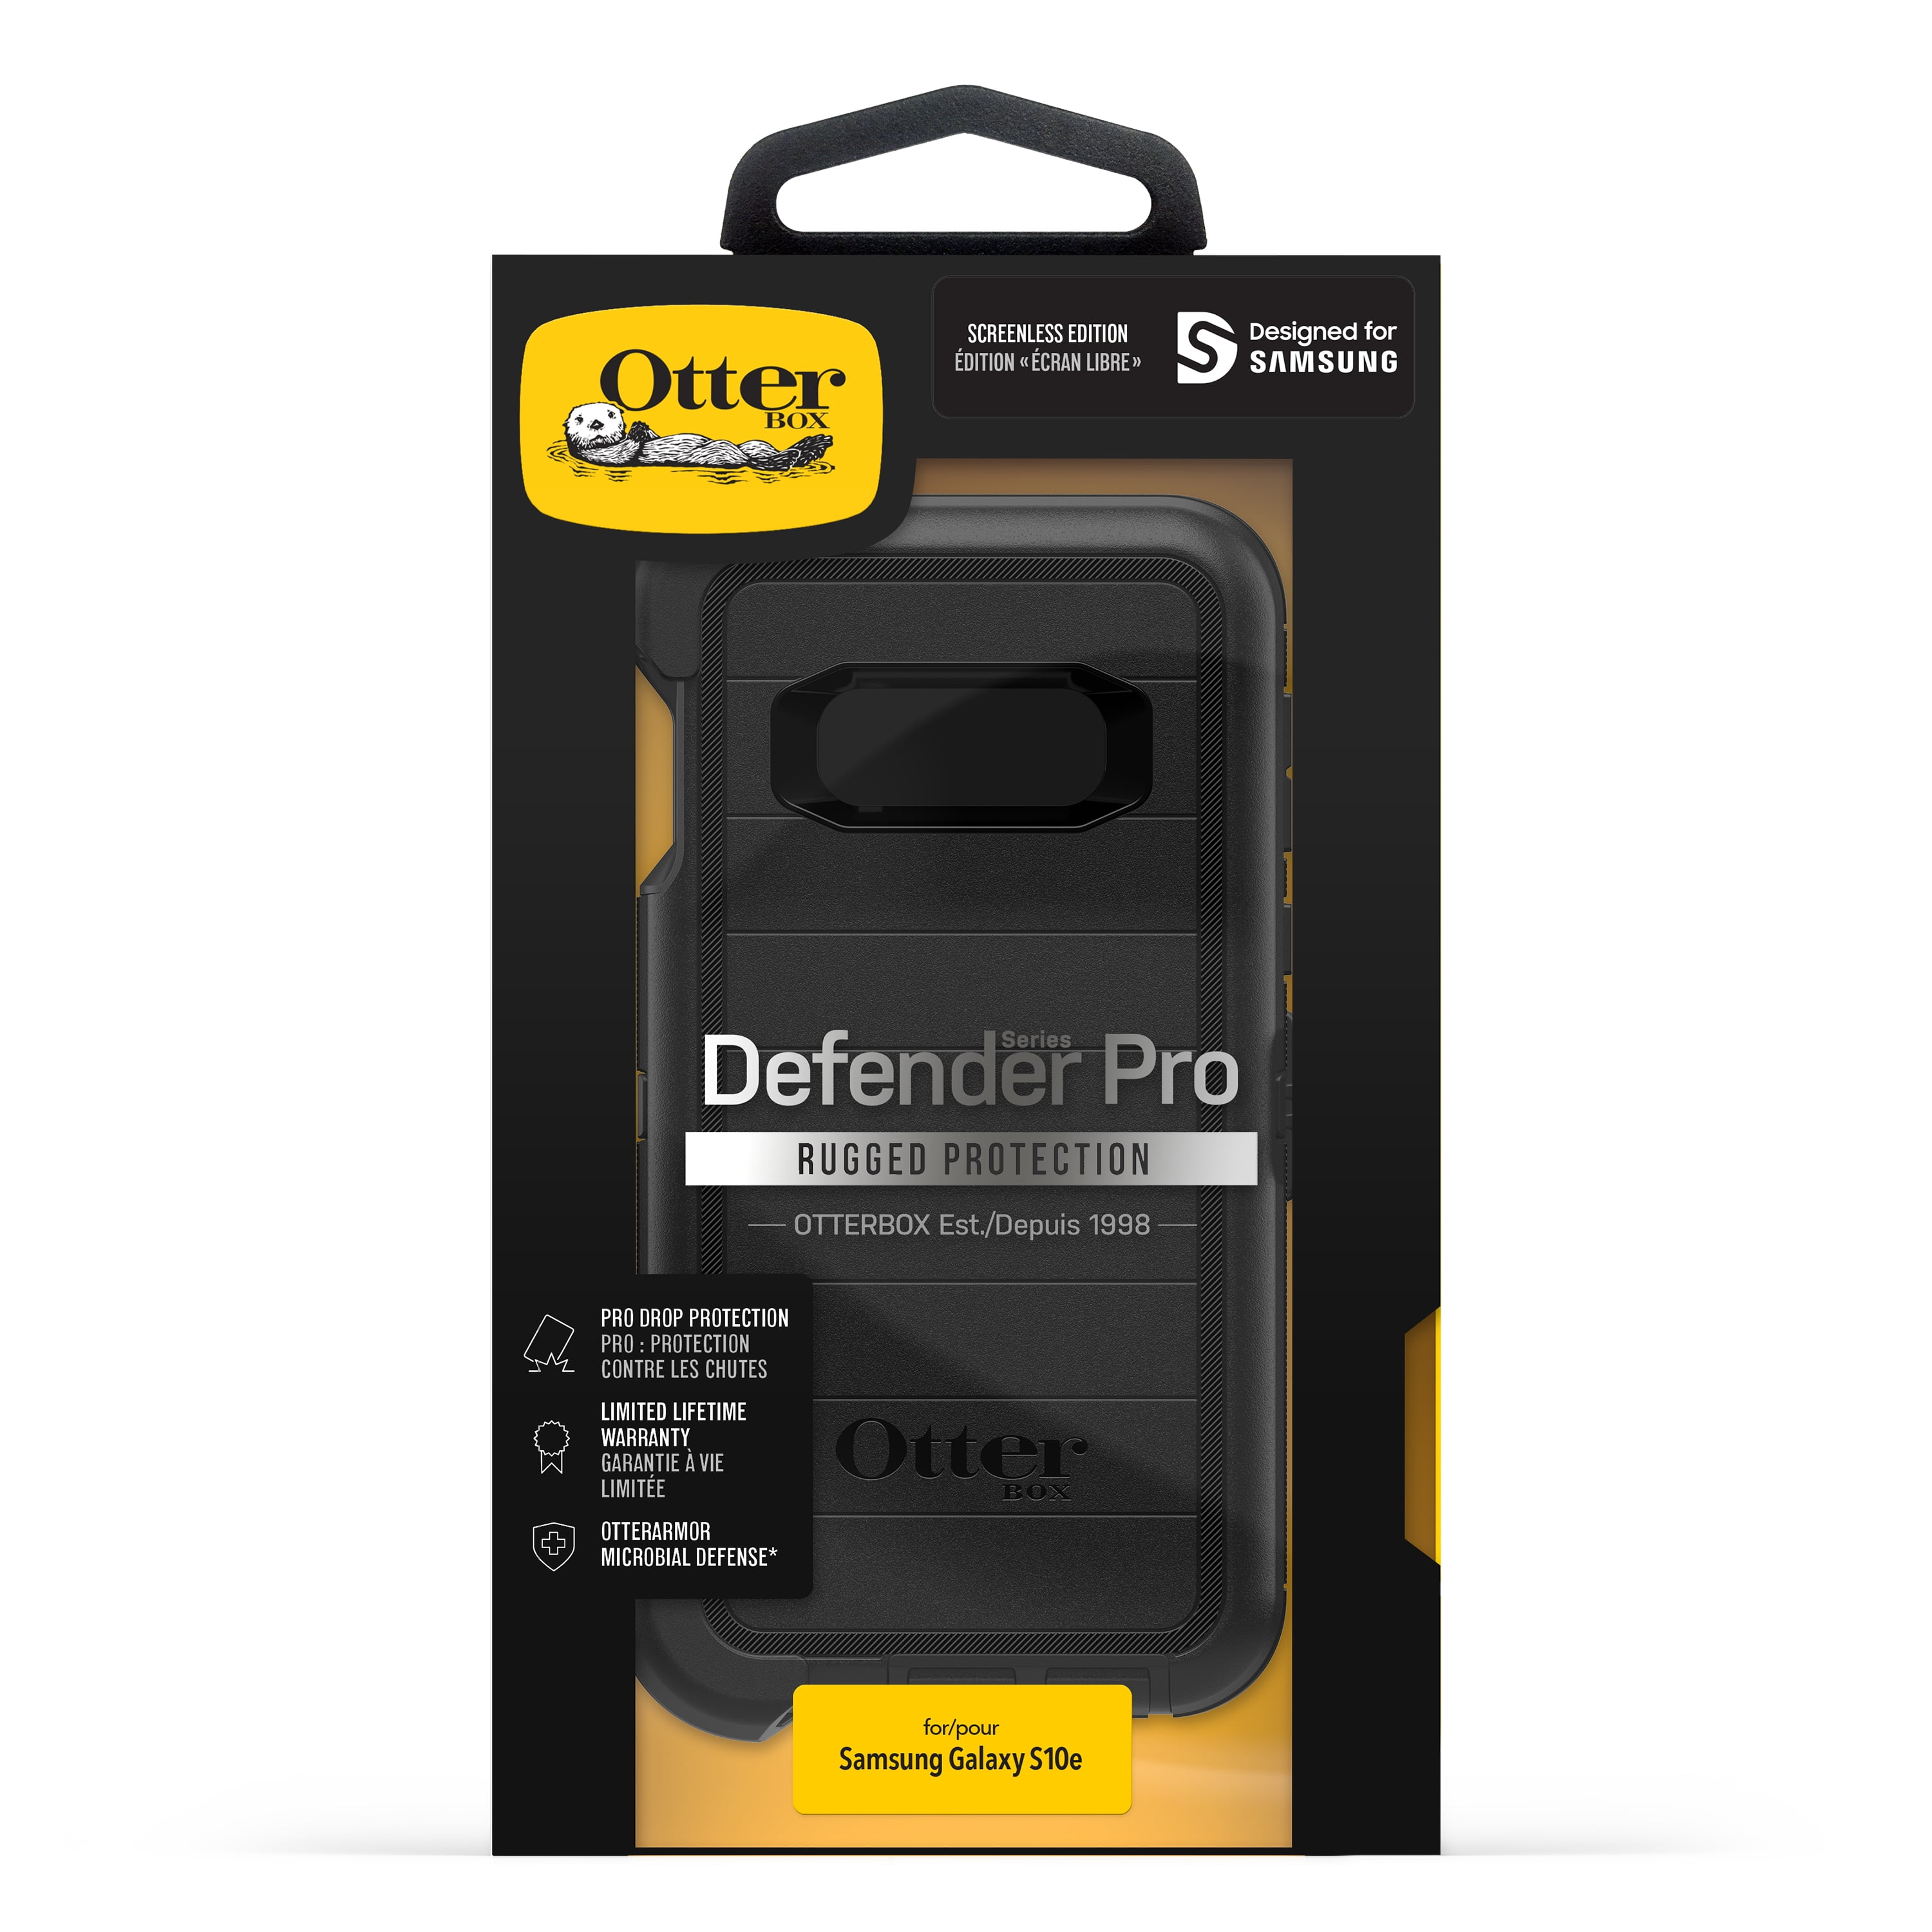 OTTERBOX Sam Defender Pro For Samsung Galaxy S10e - Black for sale online